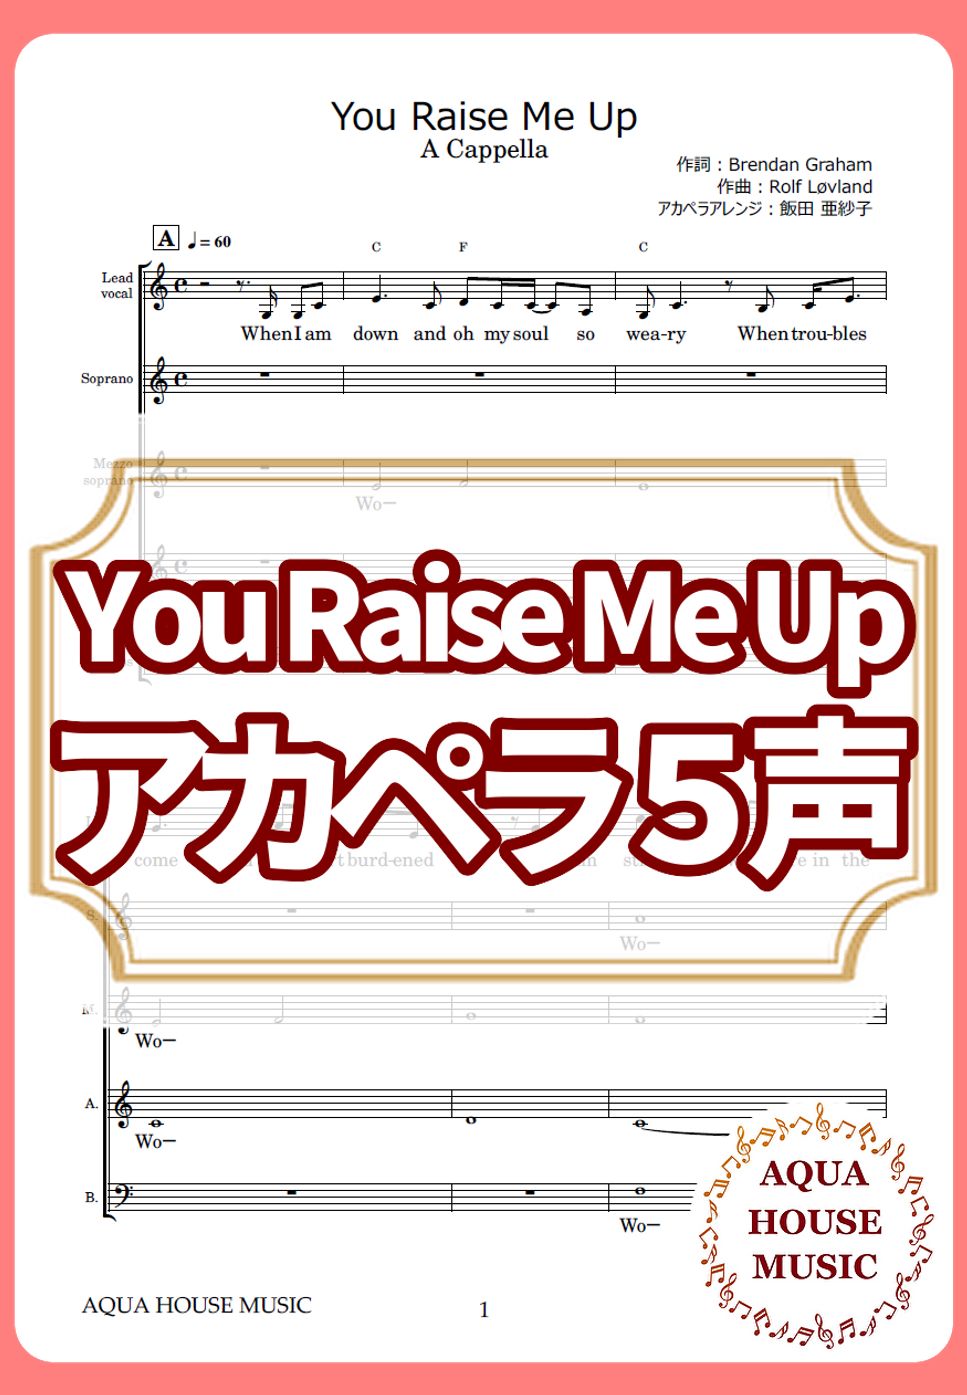 Celtic Woman - You Raise Me Up (アカペラ楽譜♪５声ボイパなし) by 飯田 亜紗子